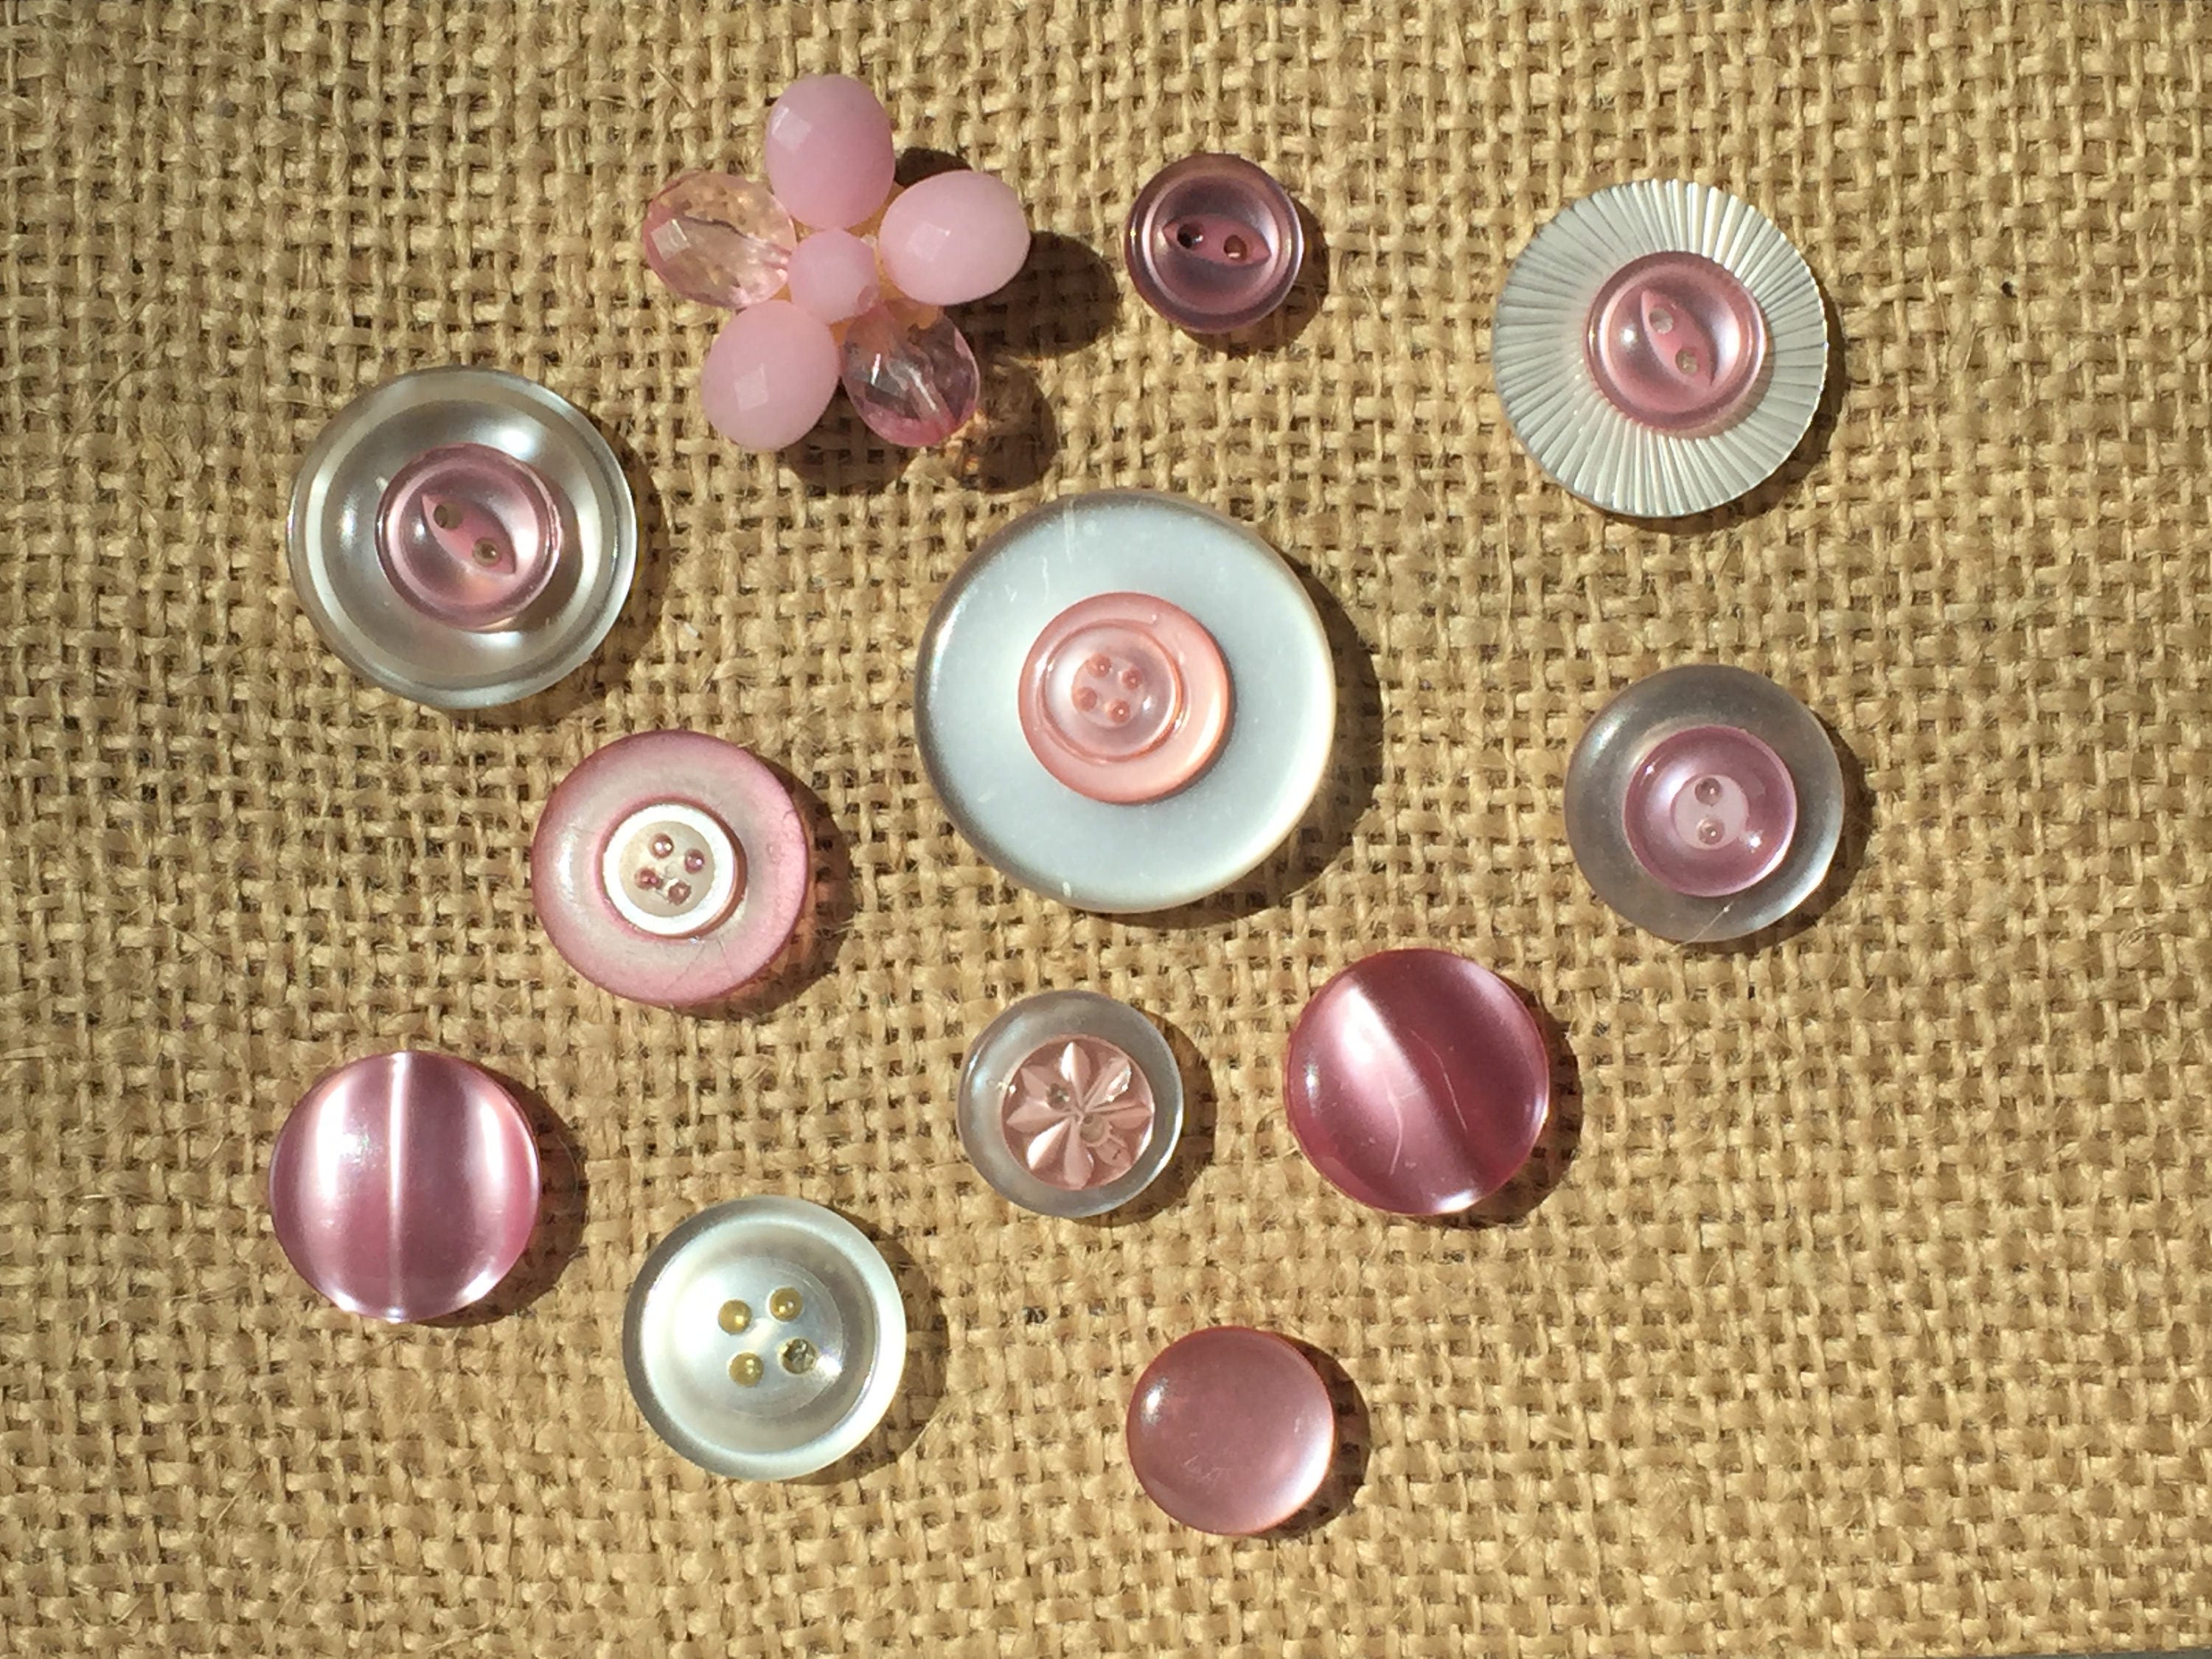 PEARL SEED Thumb TACKS - Set of 15 Handmade Decorative Push Pins SALE